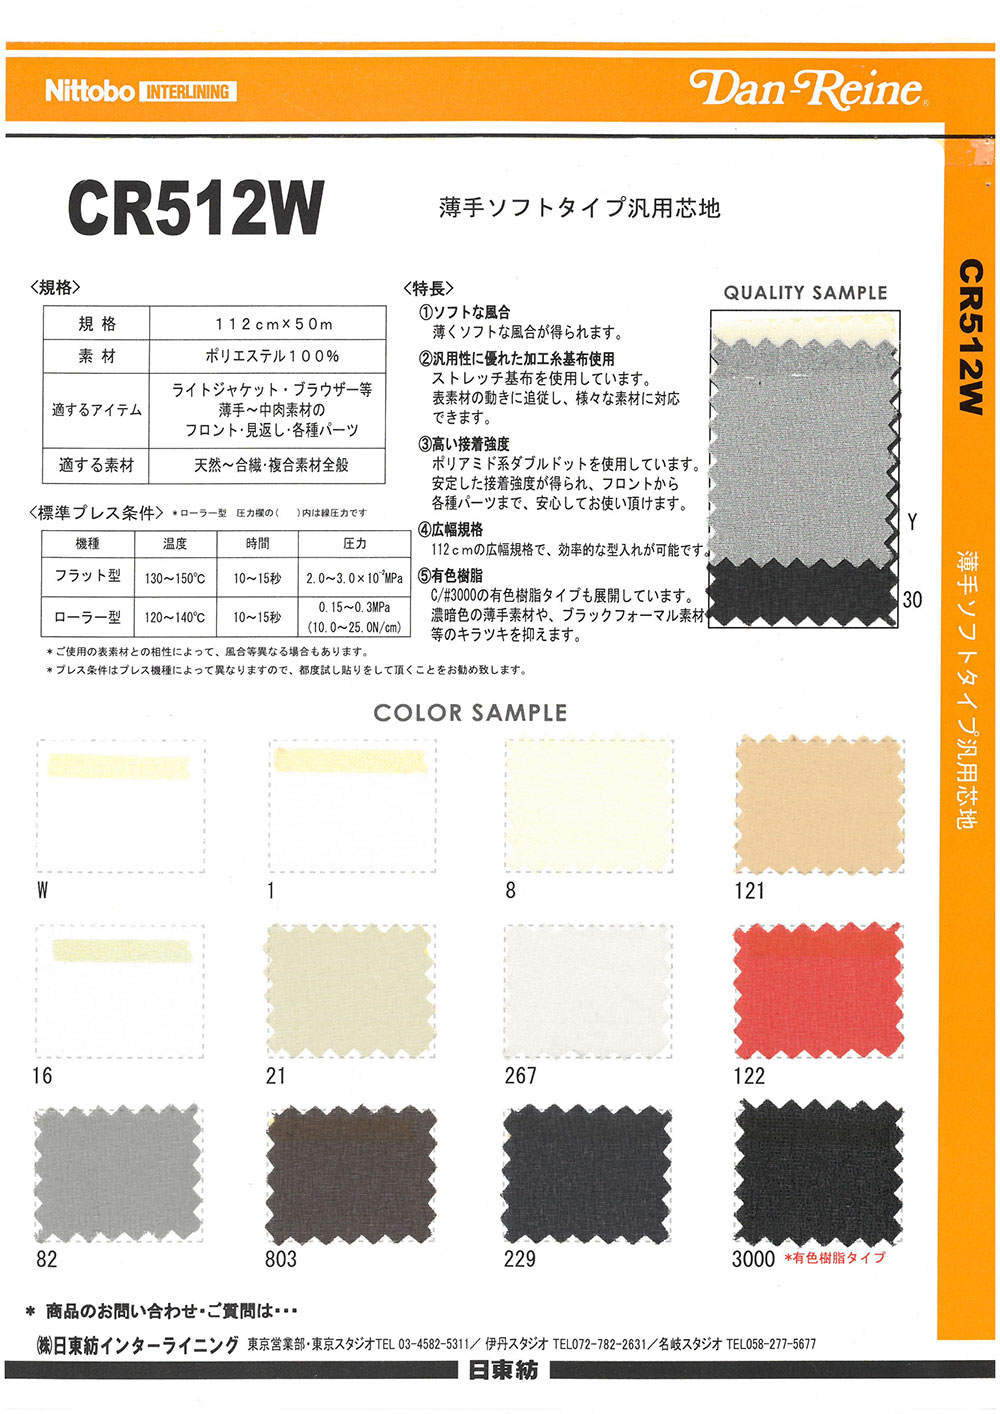 CR512W 얇은 소프트 타입 범용 심지 닛토보 (닛토보인터라이닝)